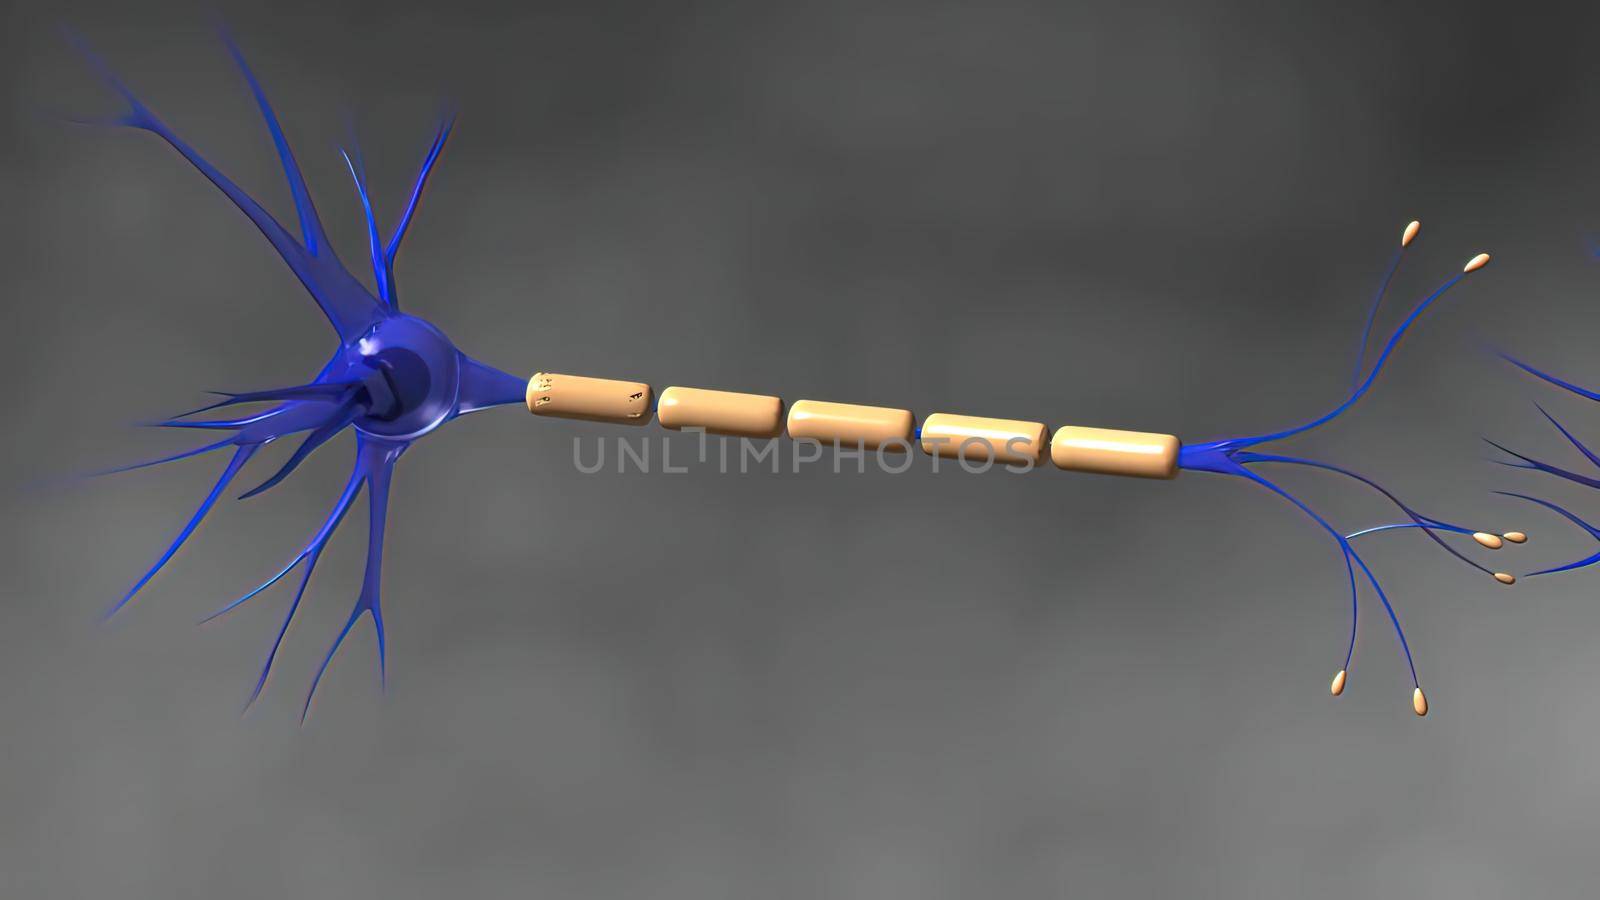 A Neuron Releasing Neurotransmitter Molecules by creativepic